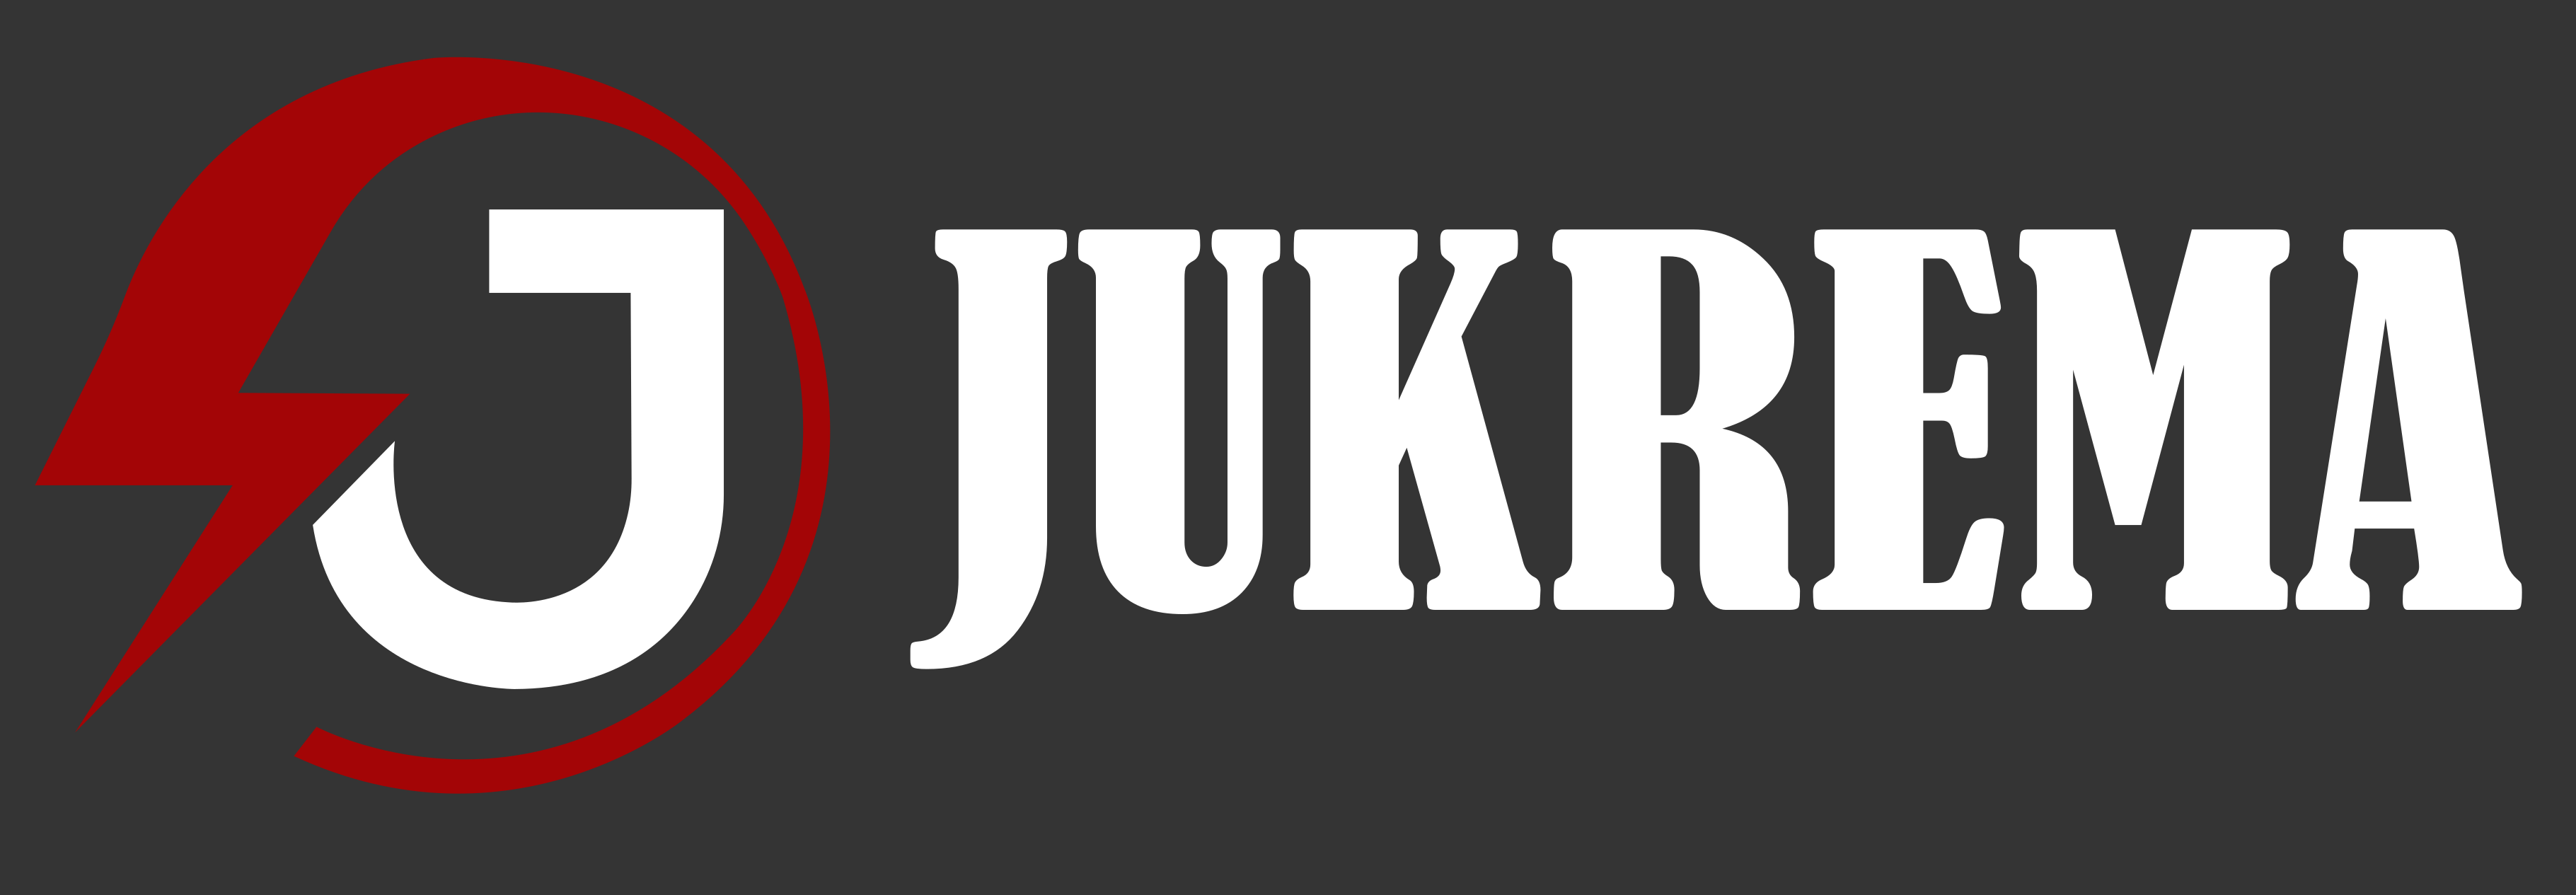 Jukrema logo